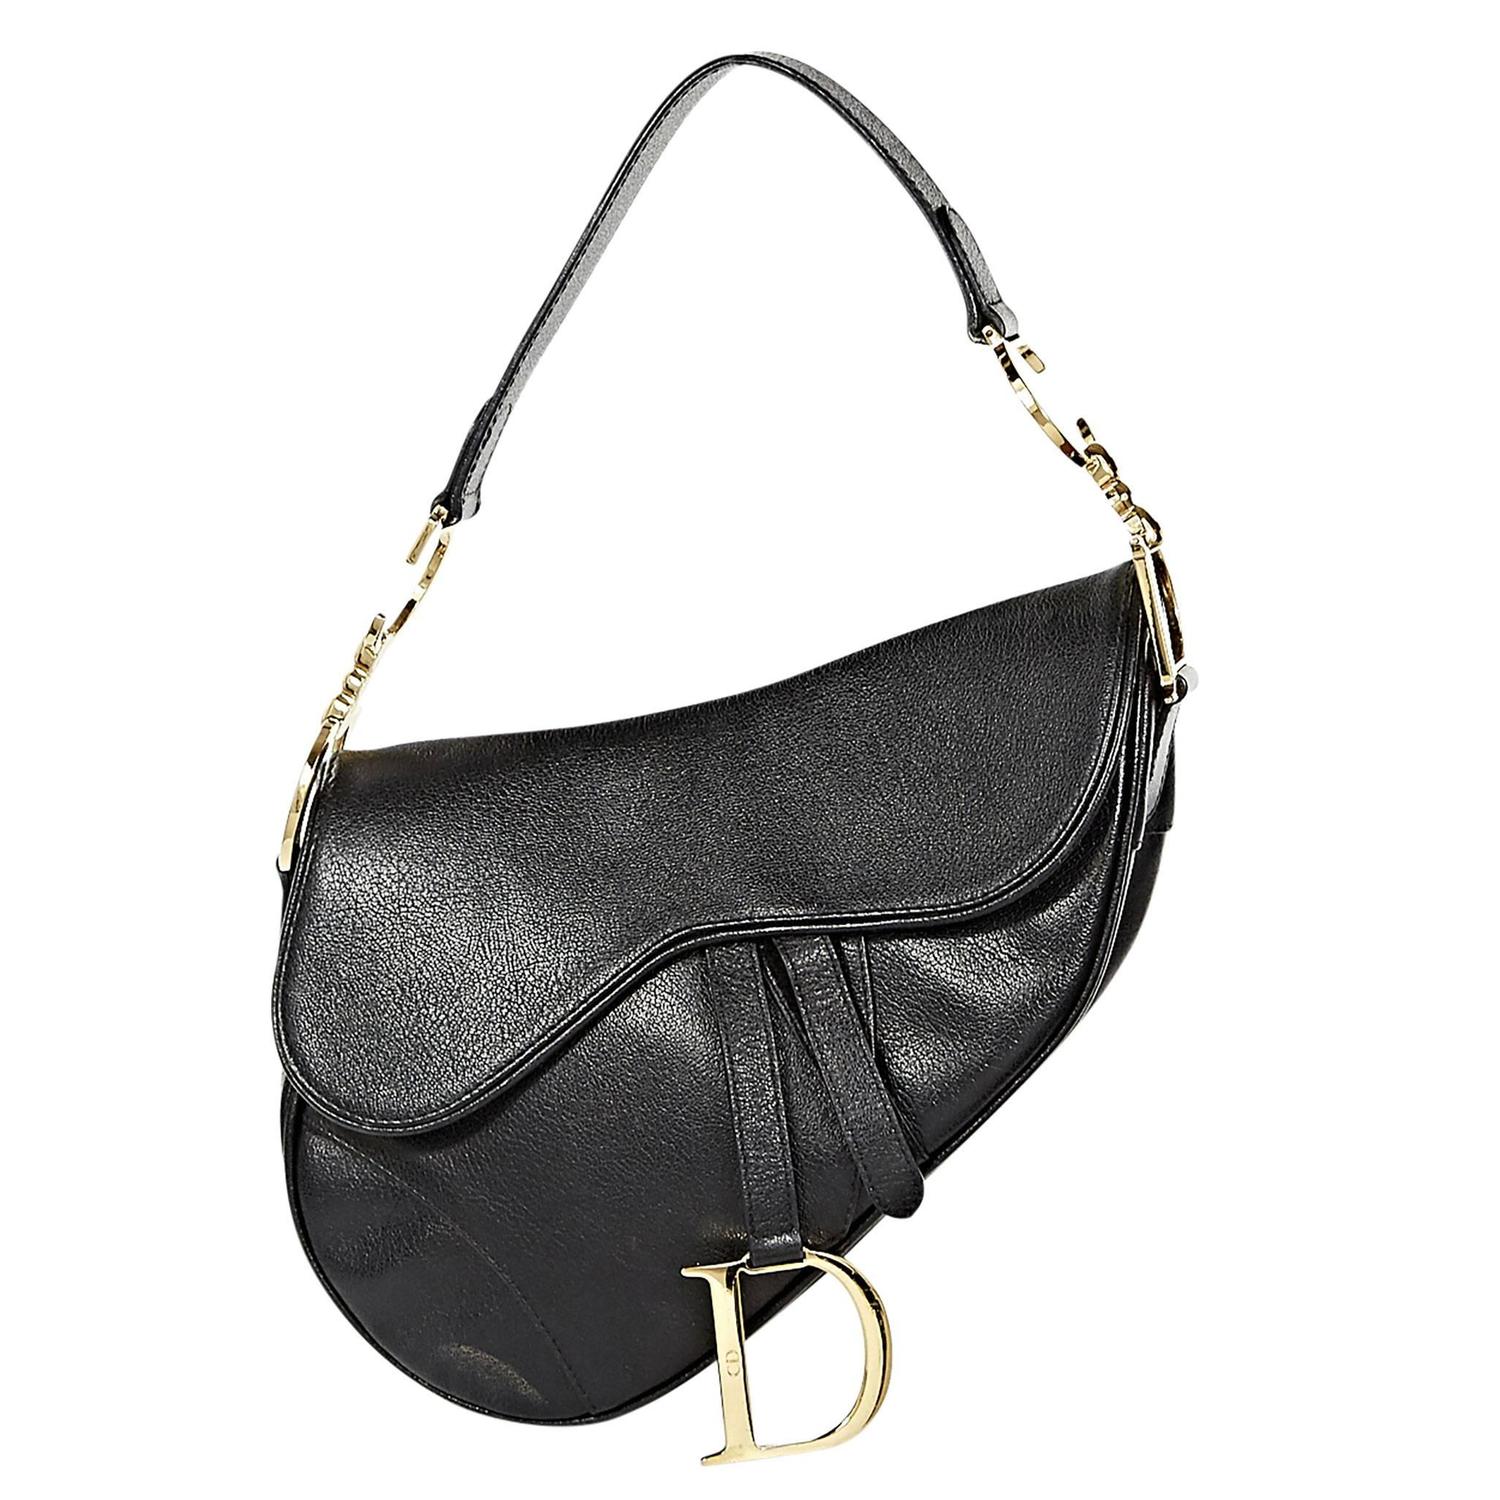 Black Christian Dior Leather Saddle Bag at 1stdibs